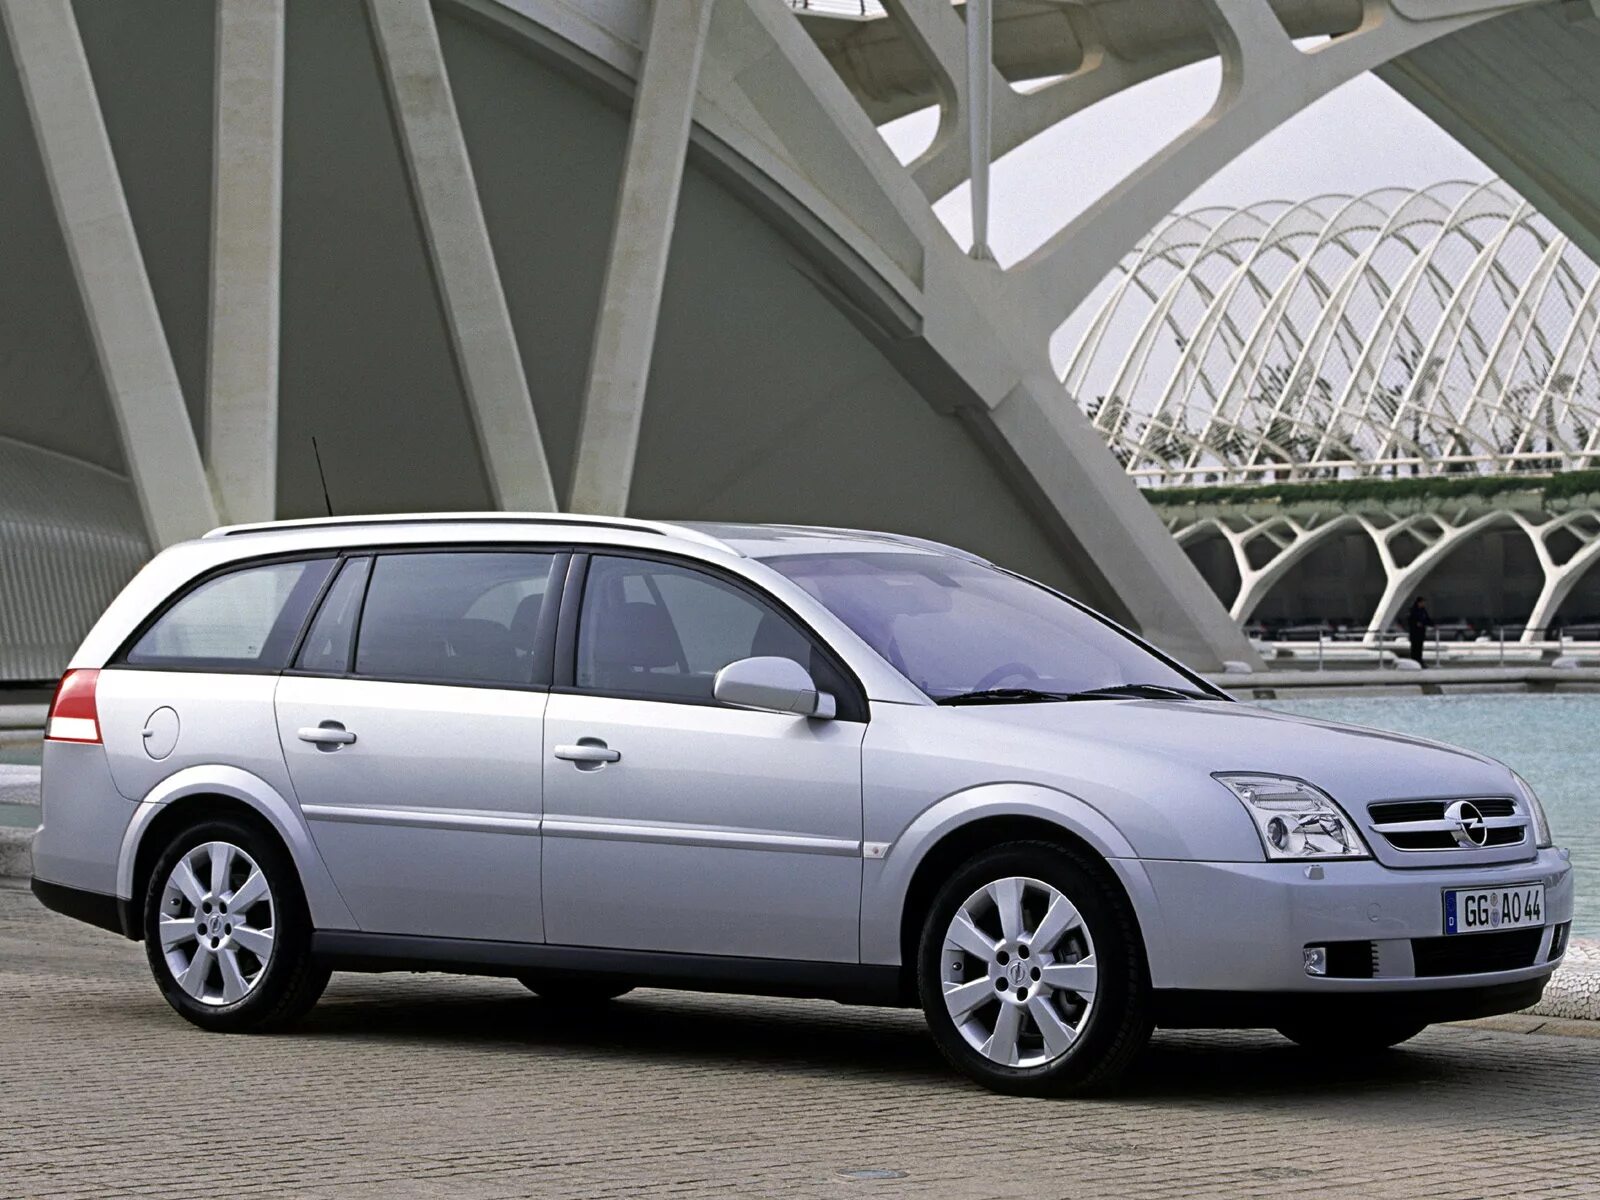 Опель Вектра 2004 универсал. Opel Vectra c 2003 универсал. Opel Vectra c 2004 универсал. Опель Вектра с 2005 универсал. Вектра караван